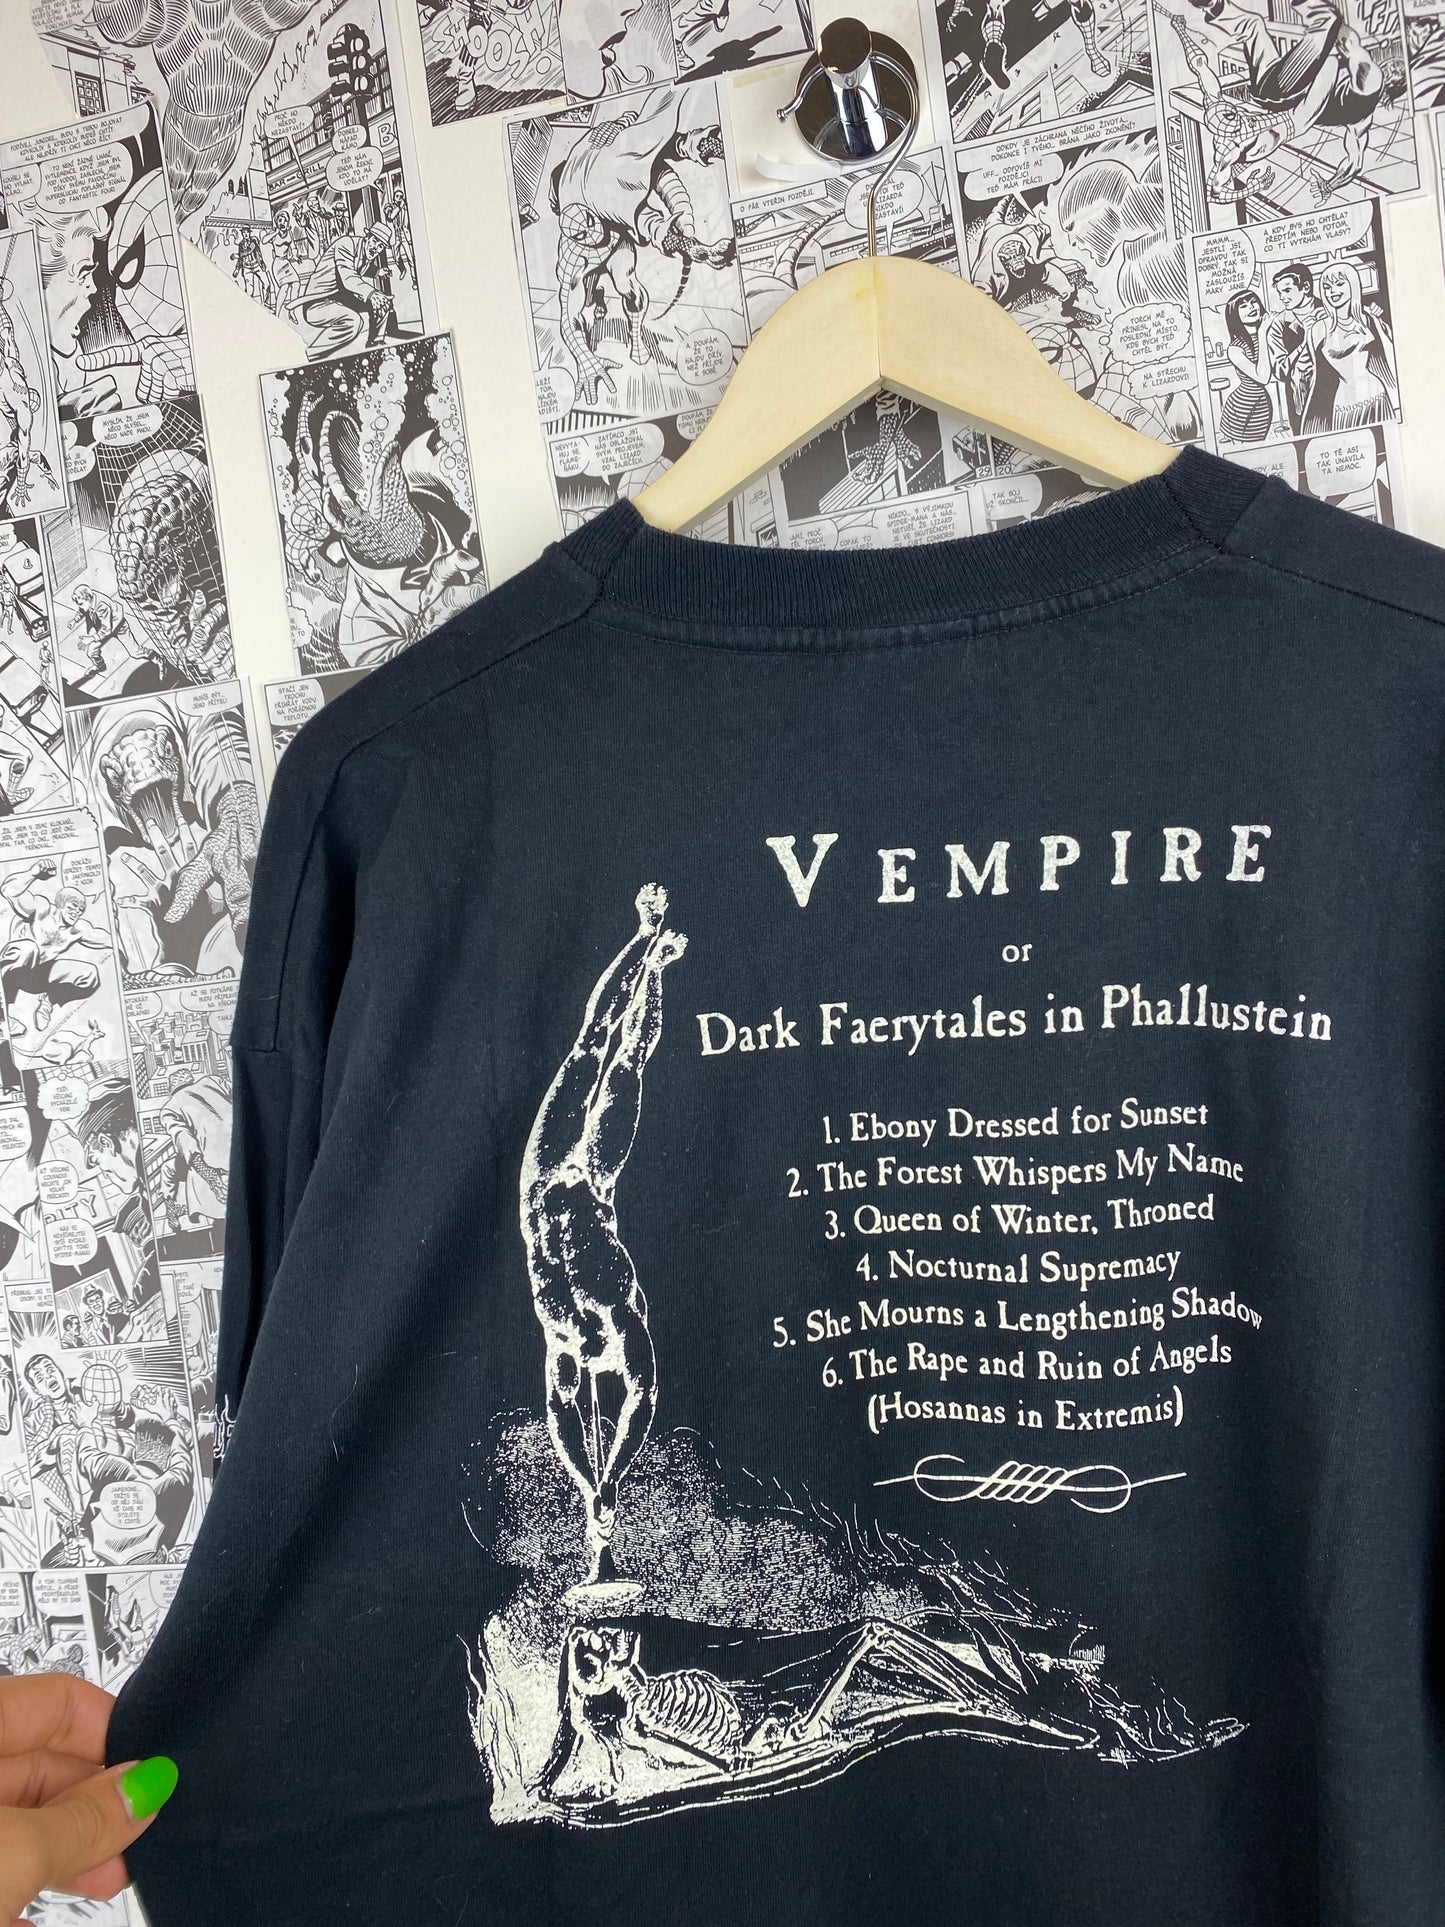 Vintage Cradle of Filth “Vempire” 90s t-shirt - size XL